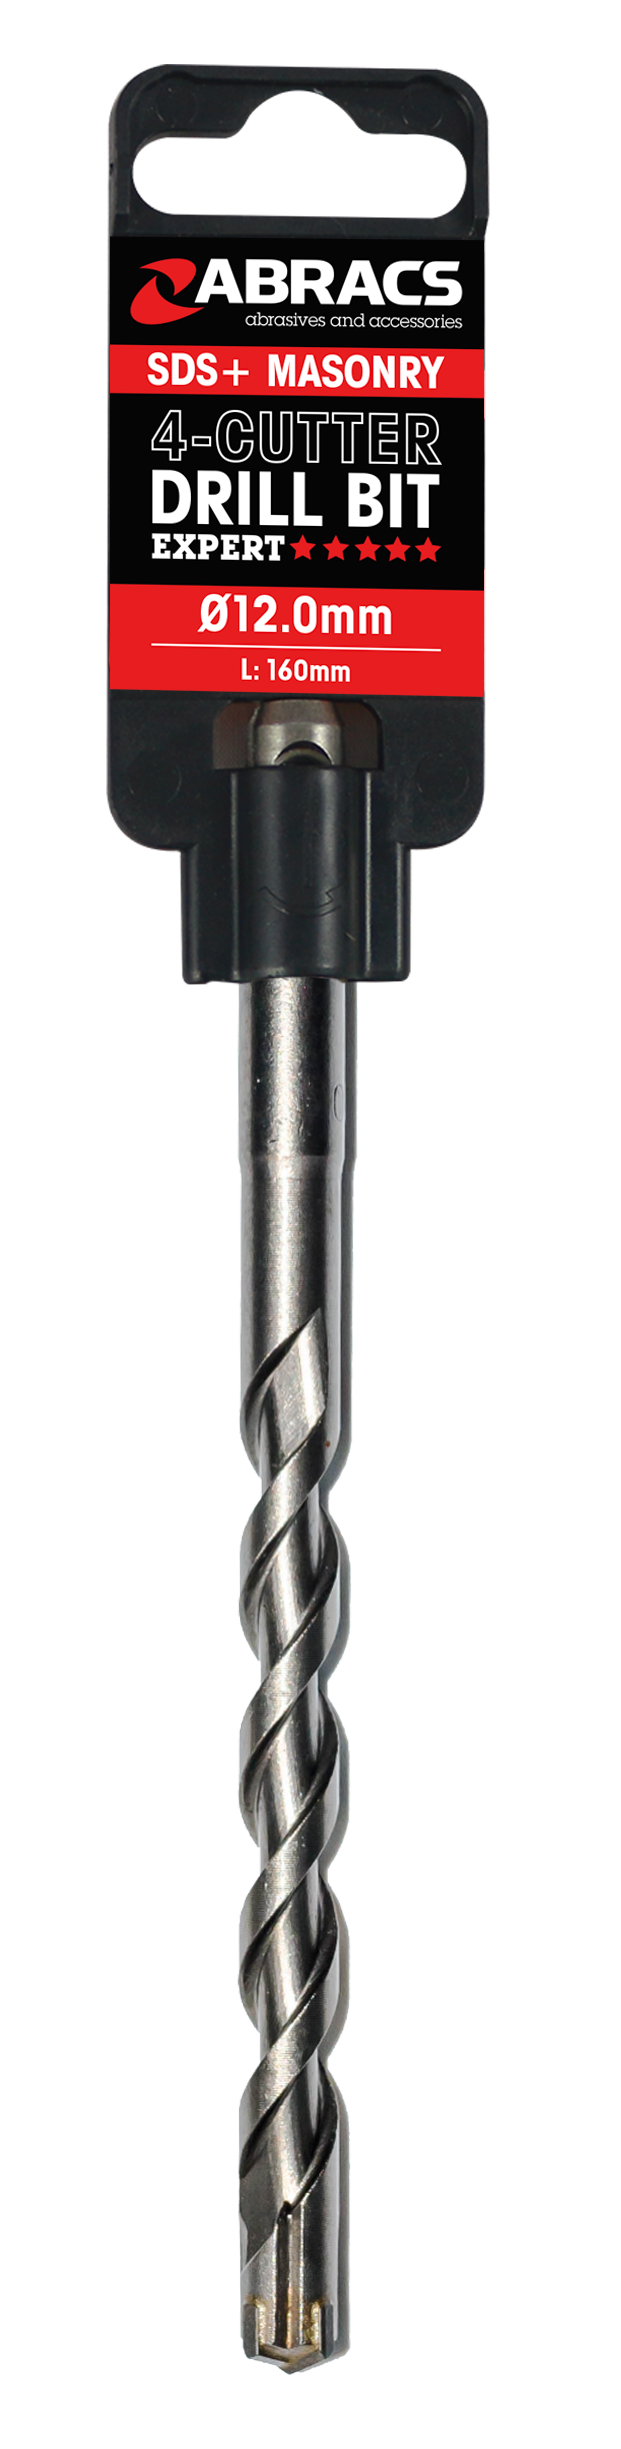 DBCX080310 8.0mm x 310mm SDS+ Masonry Drill Bit - 4 Cutter